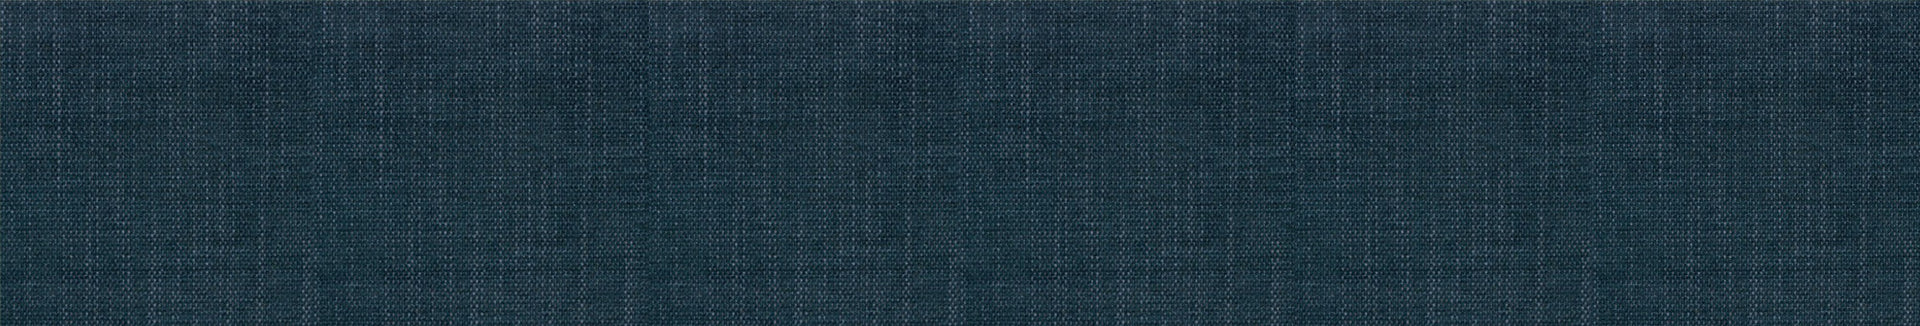 Fontibre Fabric Collection